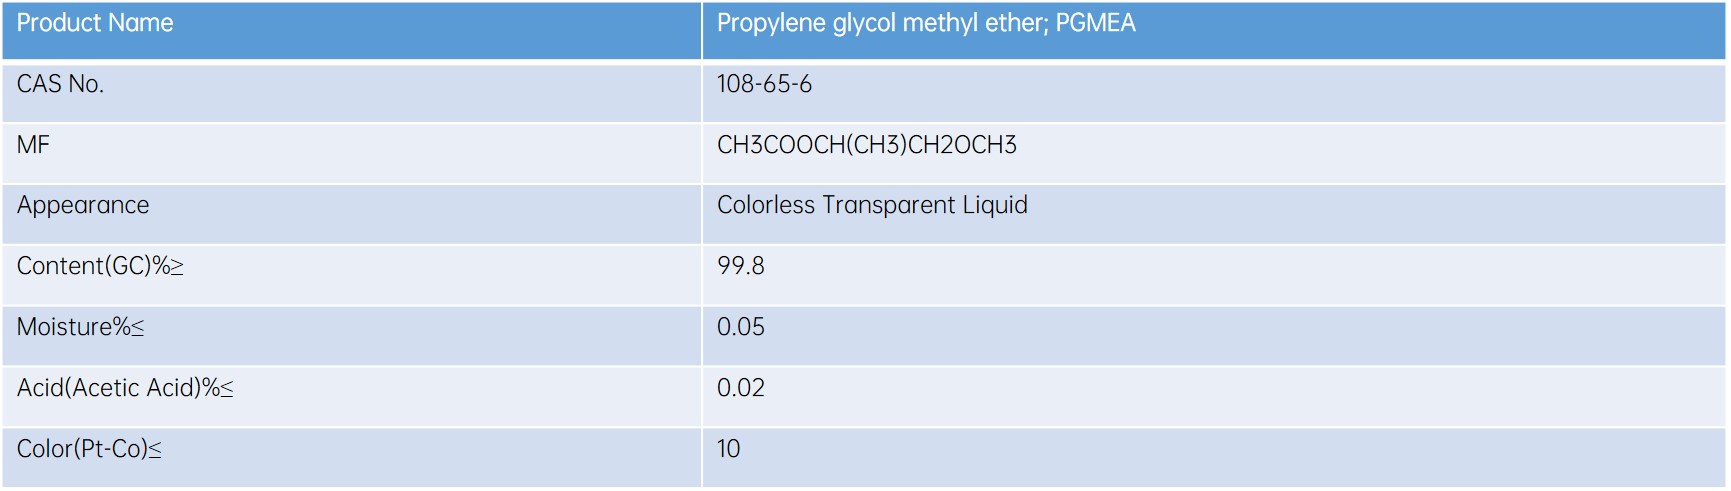 Propylene glycol methyl ether (PGMEA)